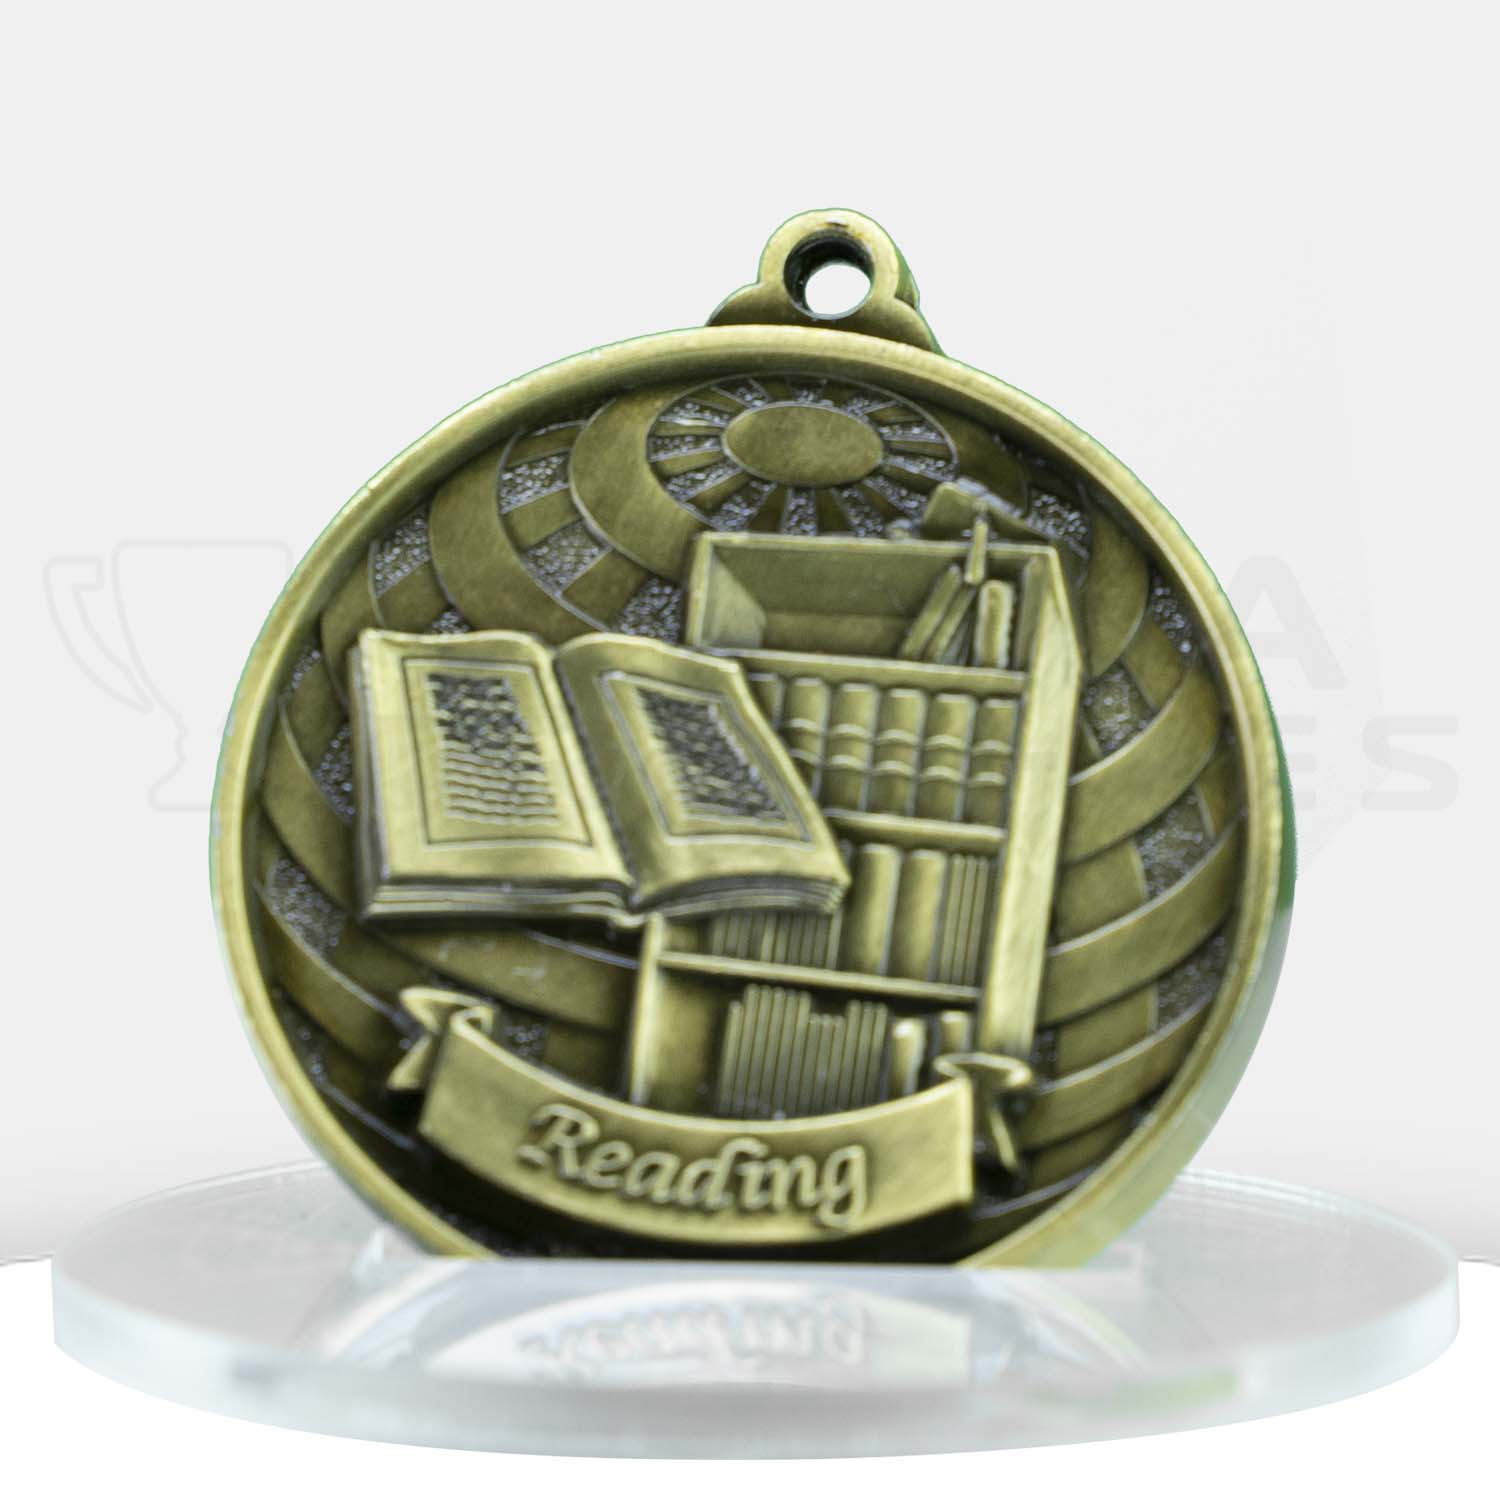 global-medal-reading-gold-front